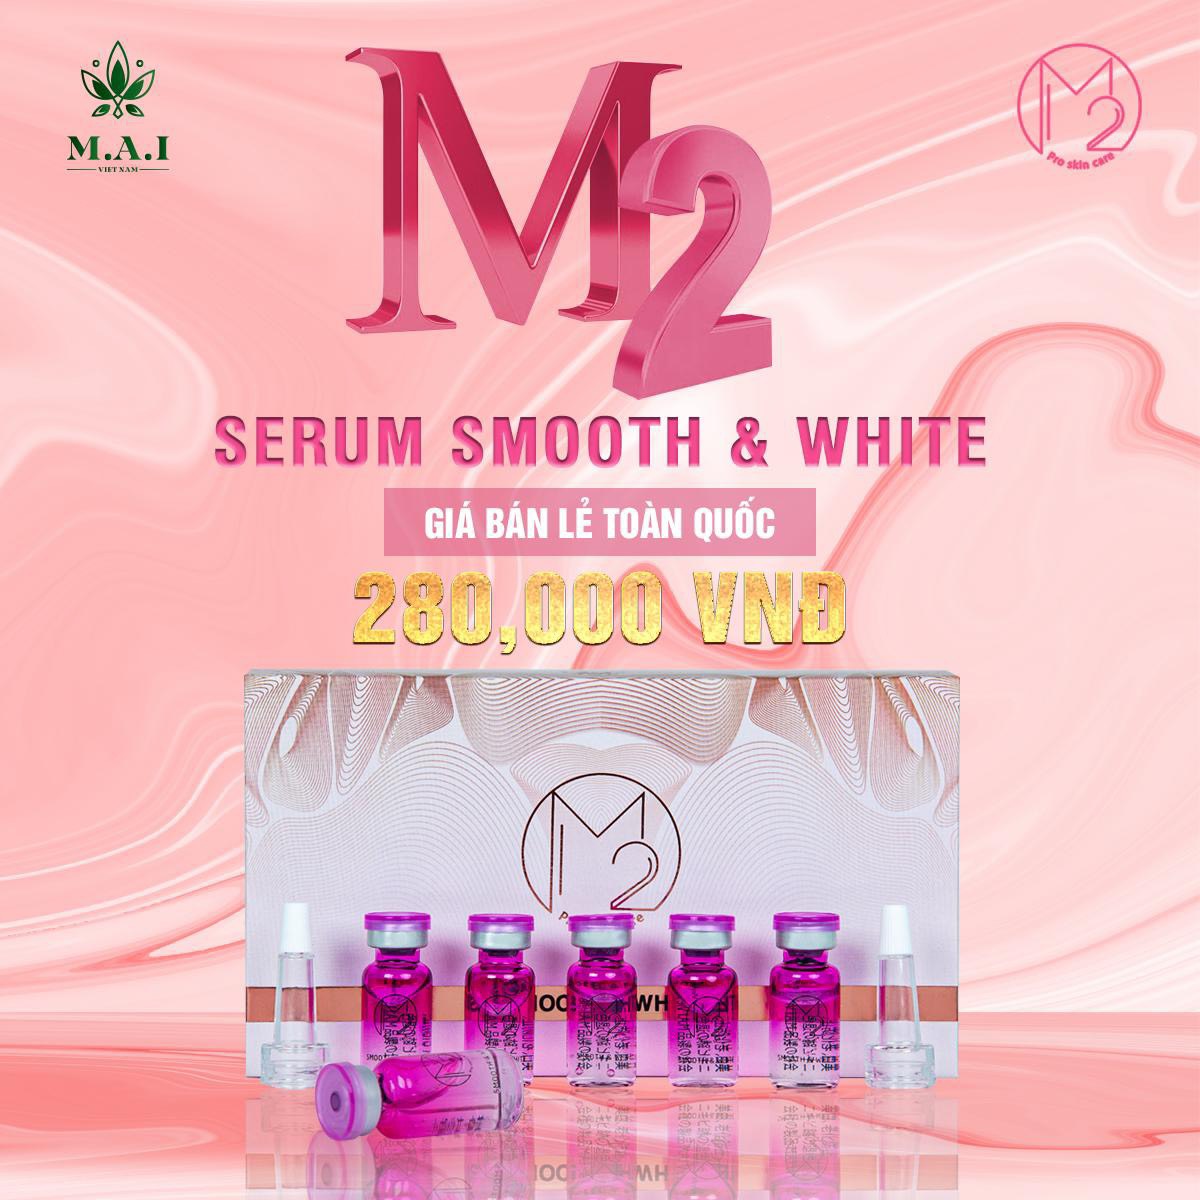 M2 Pro Skincare Smooth & White - Dược sĩ tư vấn 0902.906.357 - maivietnam.vn 